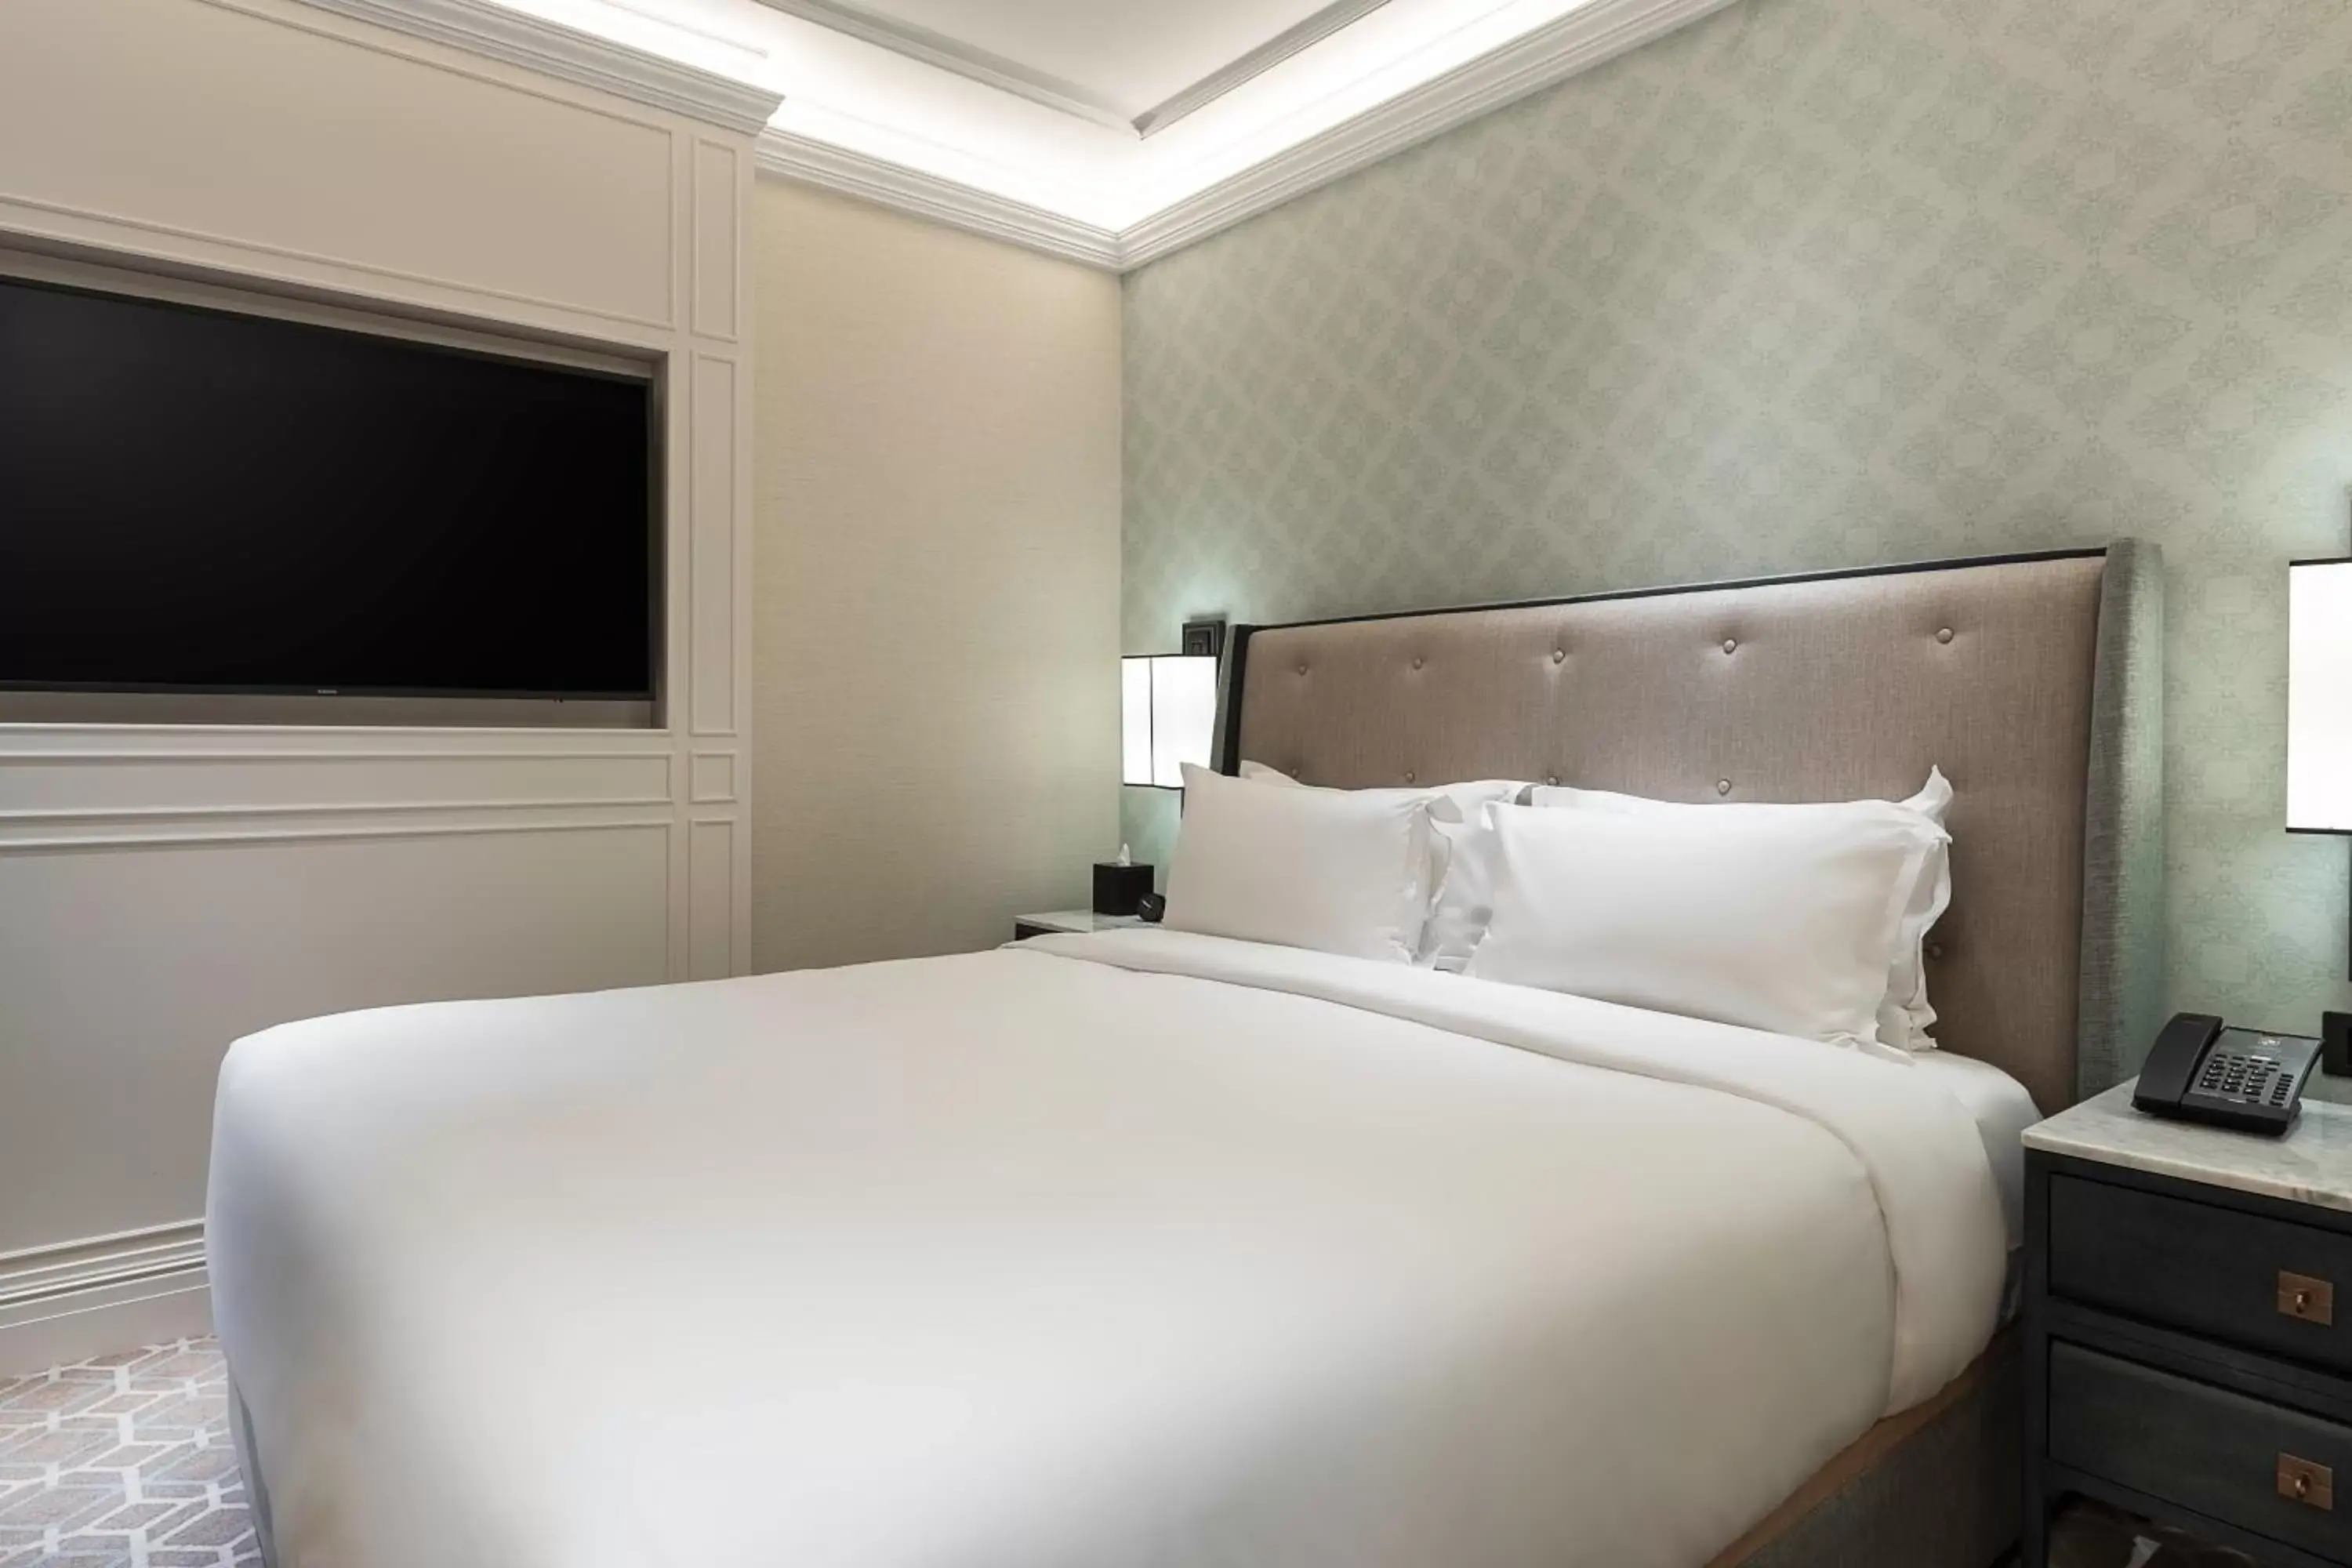 TV and multimedia, Bed in Great Scotland Yard Hotel, part of Hyatt